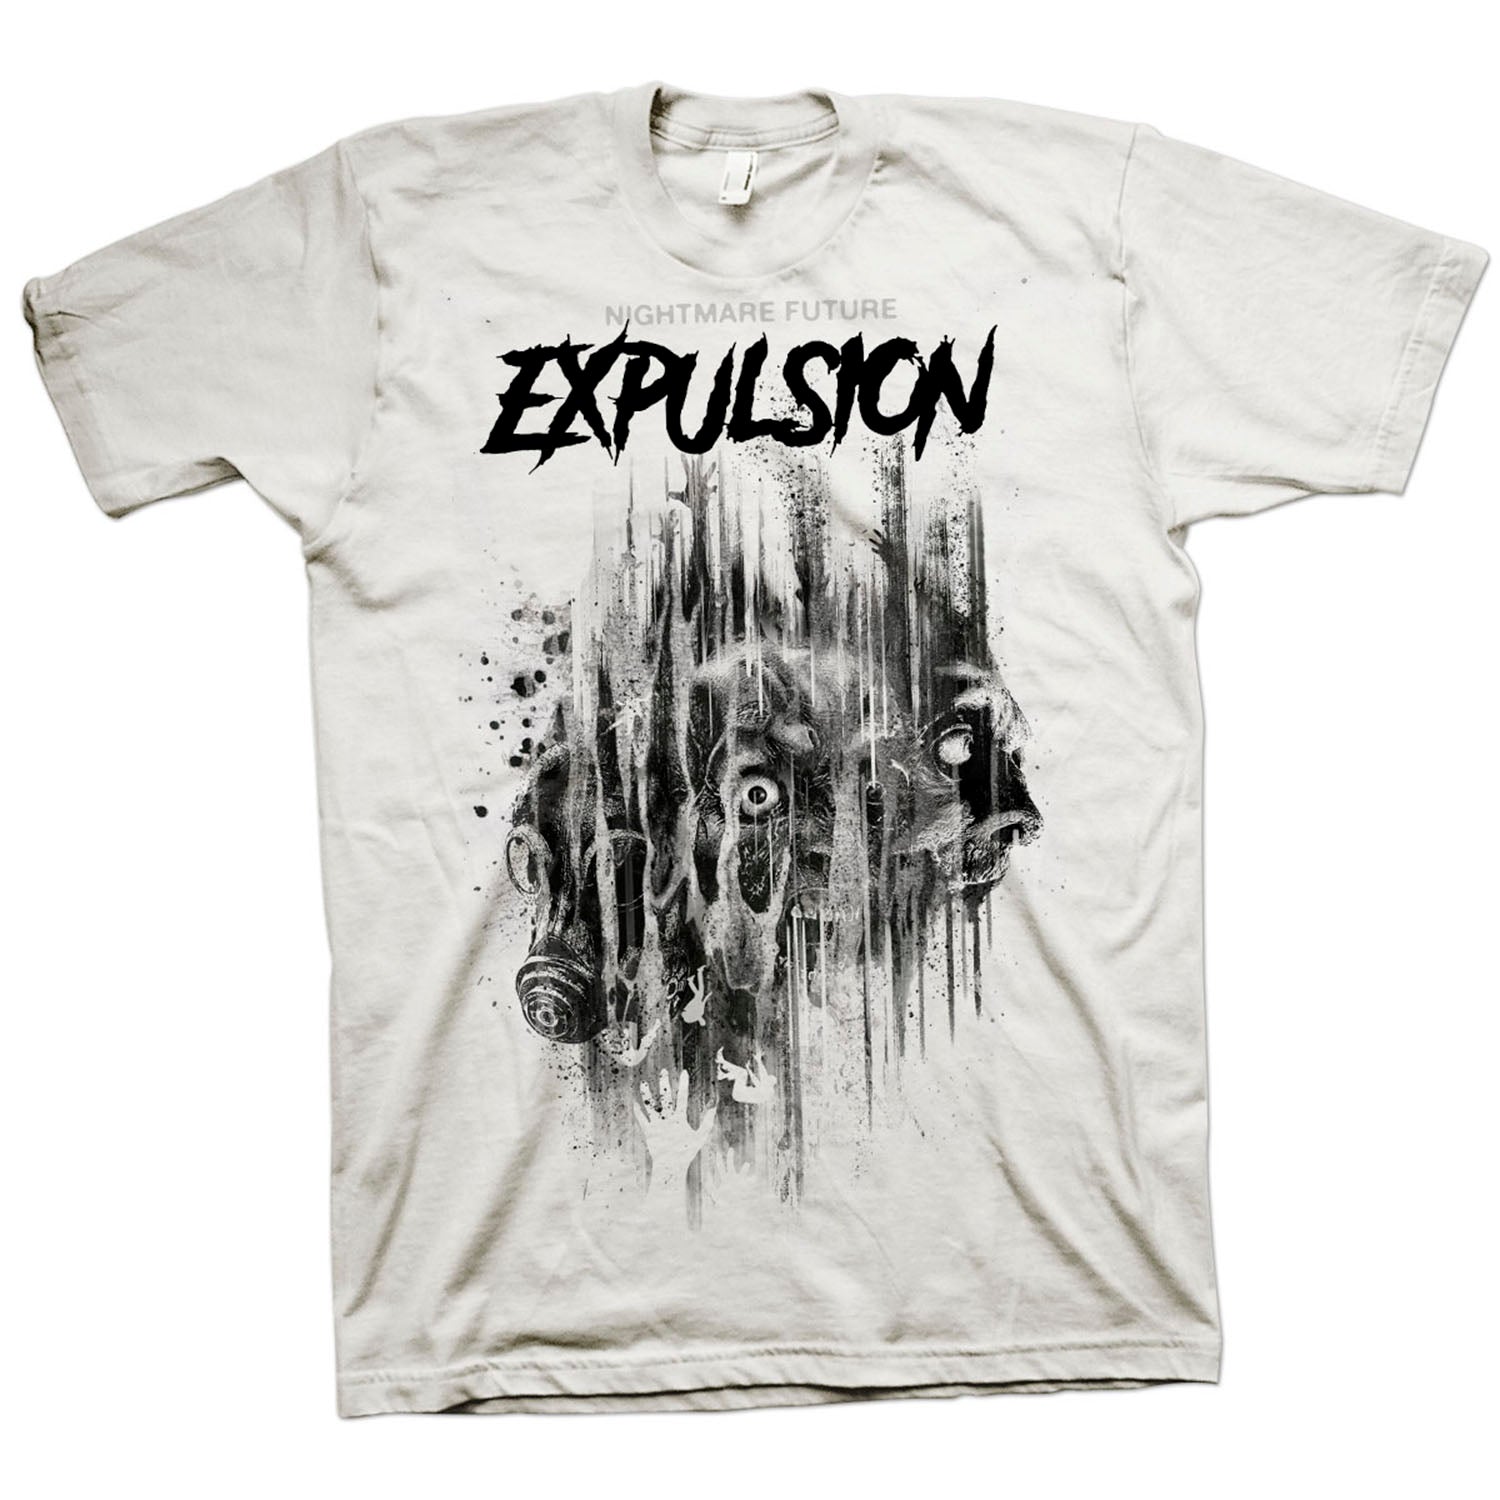 Expulsion "Nightmare Future" T-Shirt